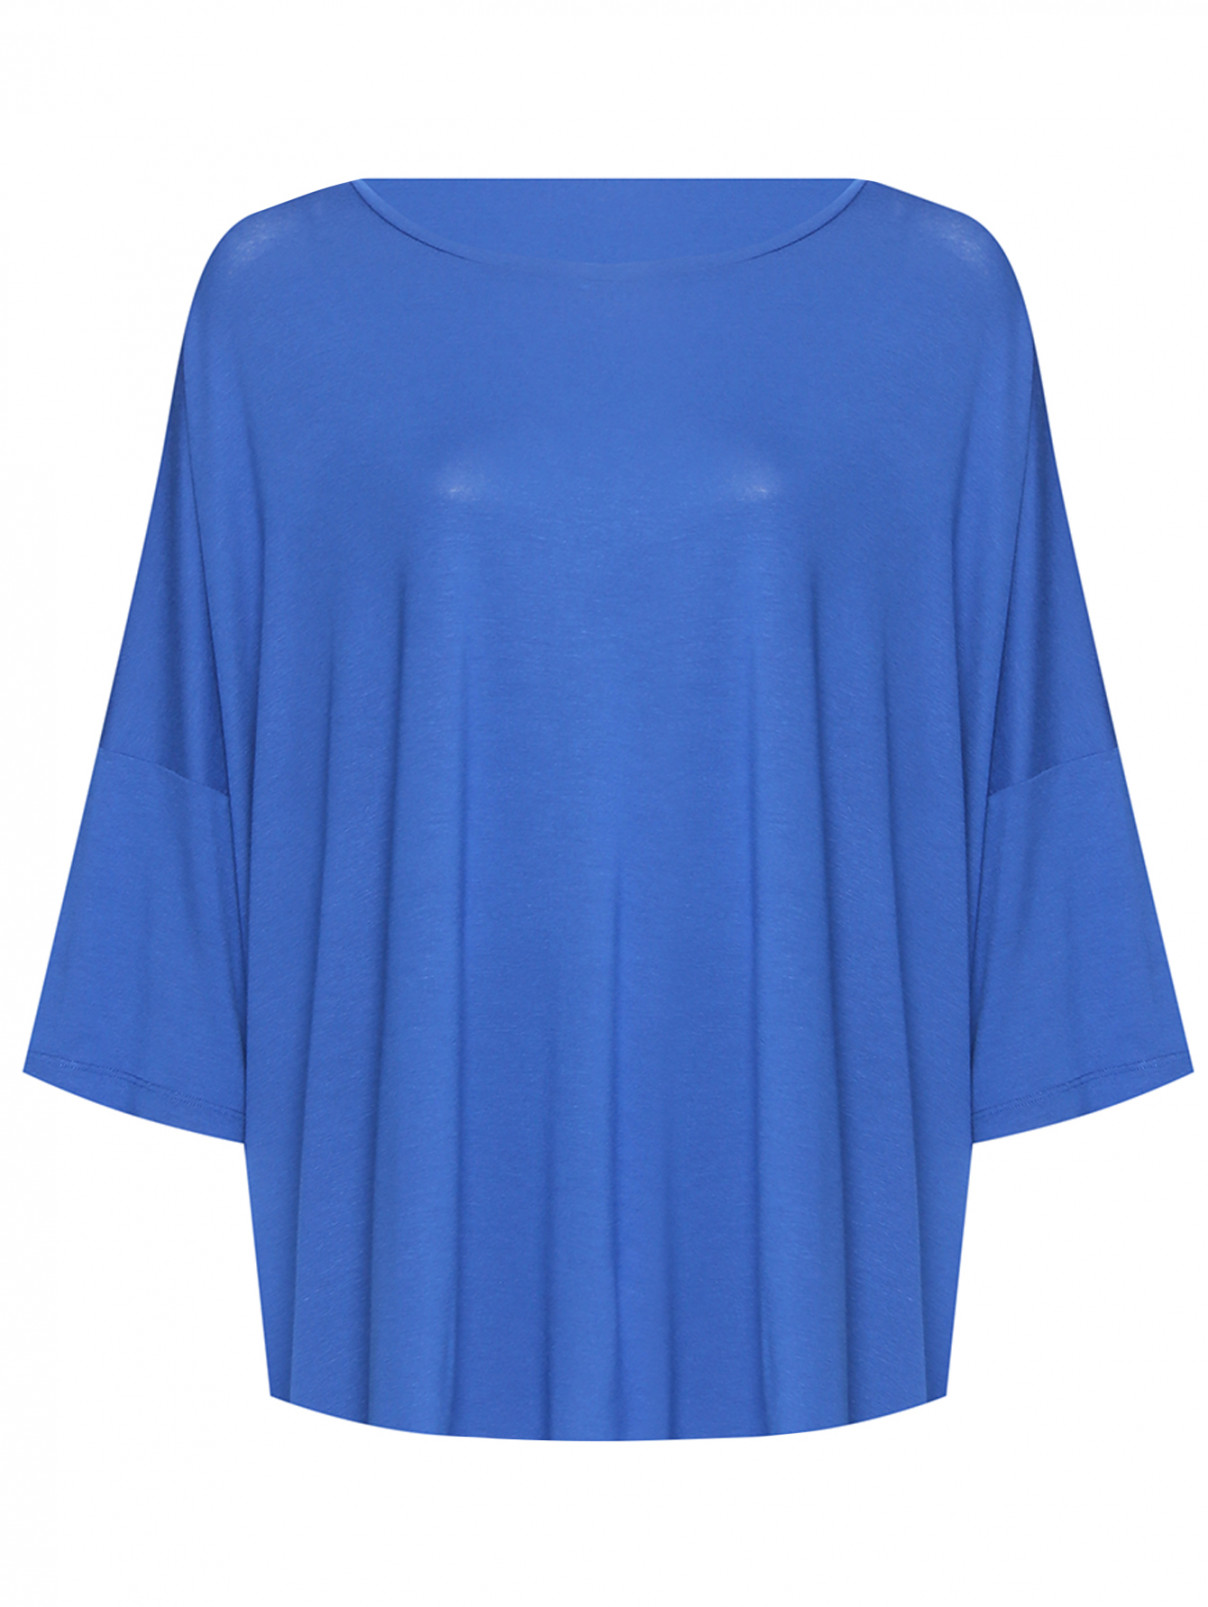 Однотонная футболка из вискозы Persona by Marina Rinaldi  –  Общий вид  – Цвет:  Синий